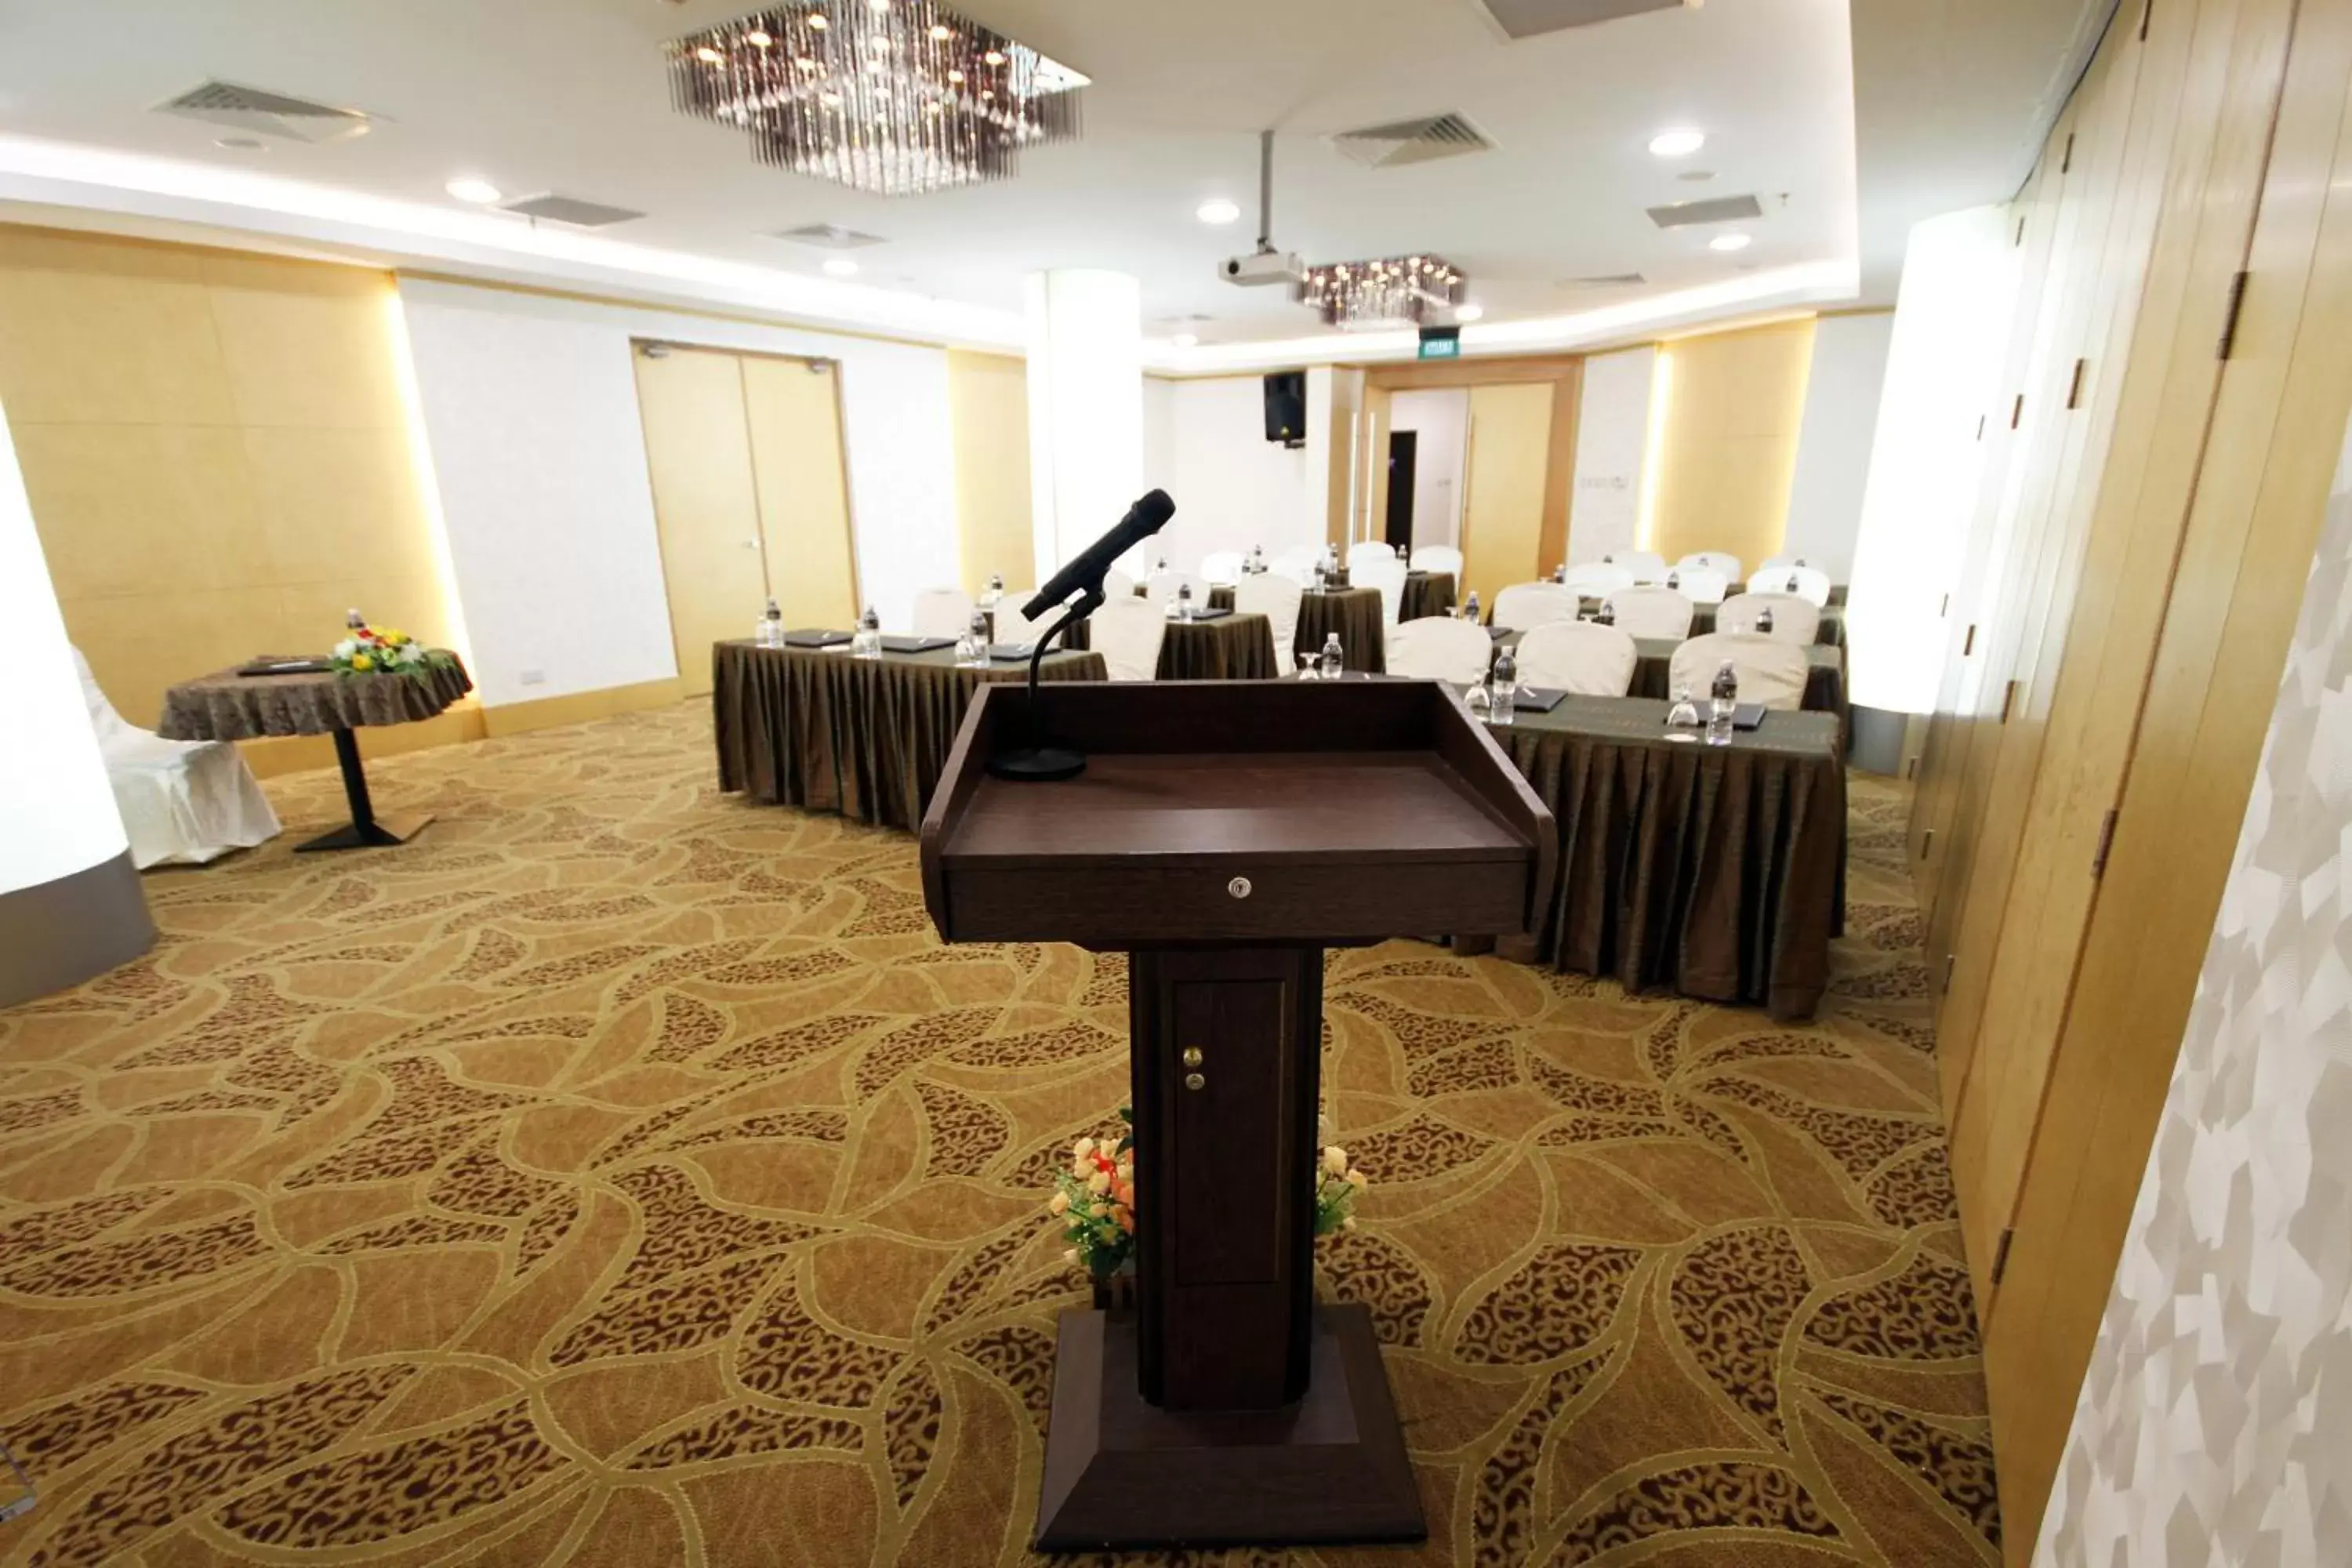 Meeting/conference room in Badi'ah Hotel